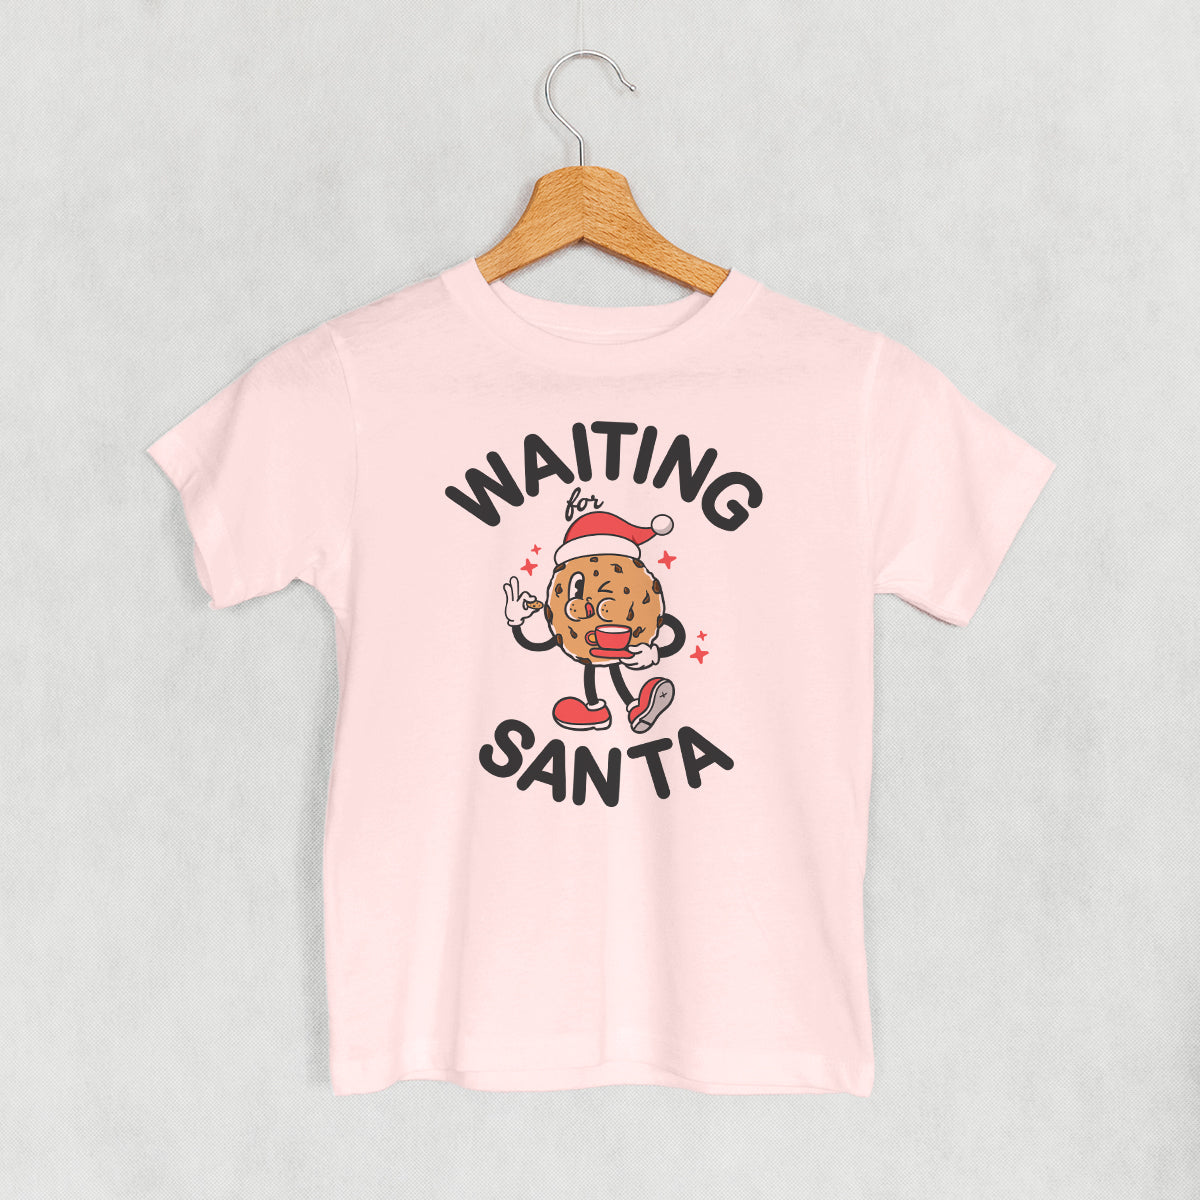 Waiting For Santa (Kids)